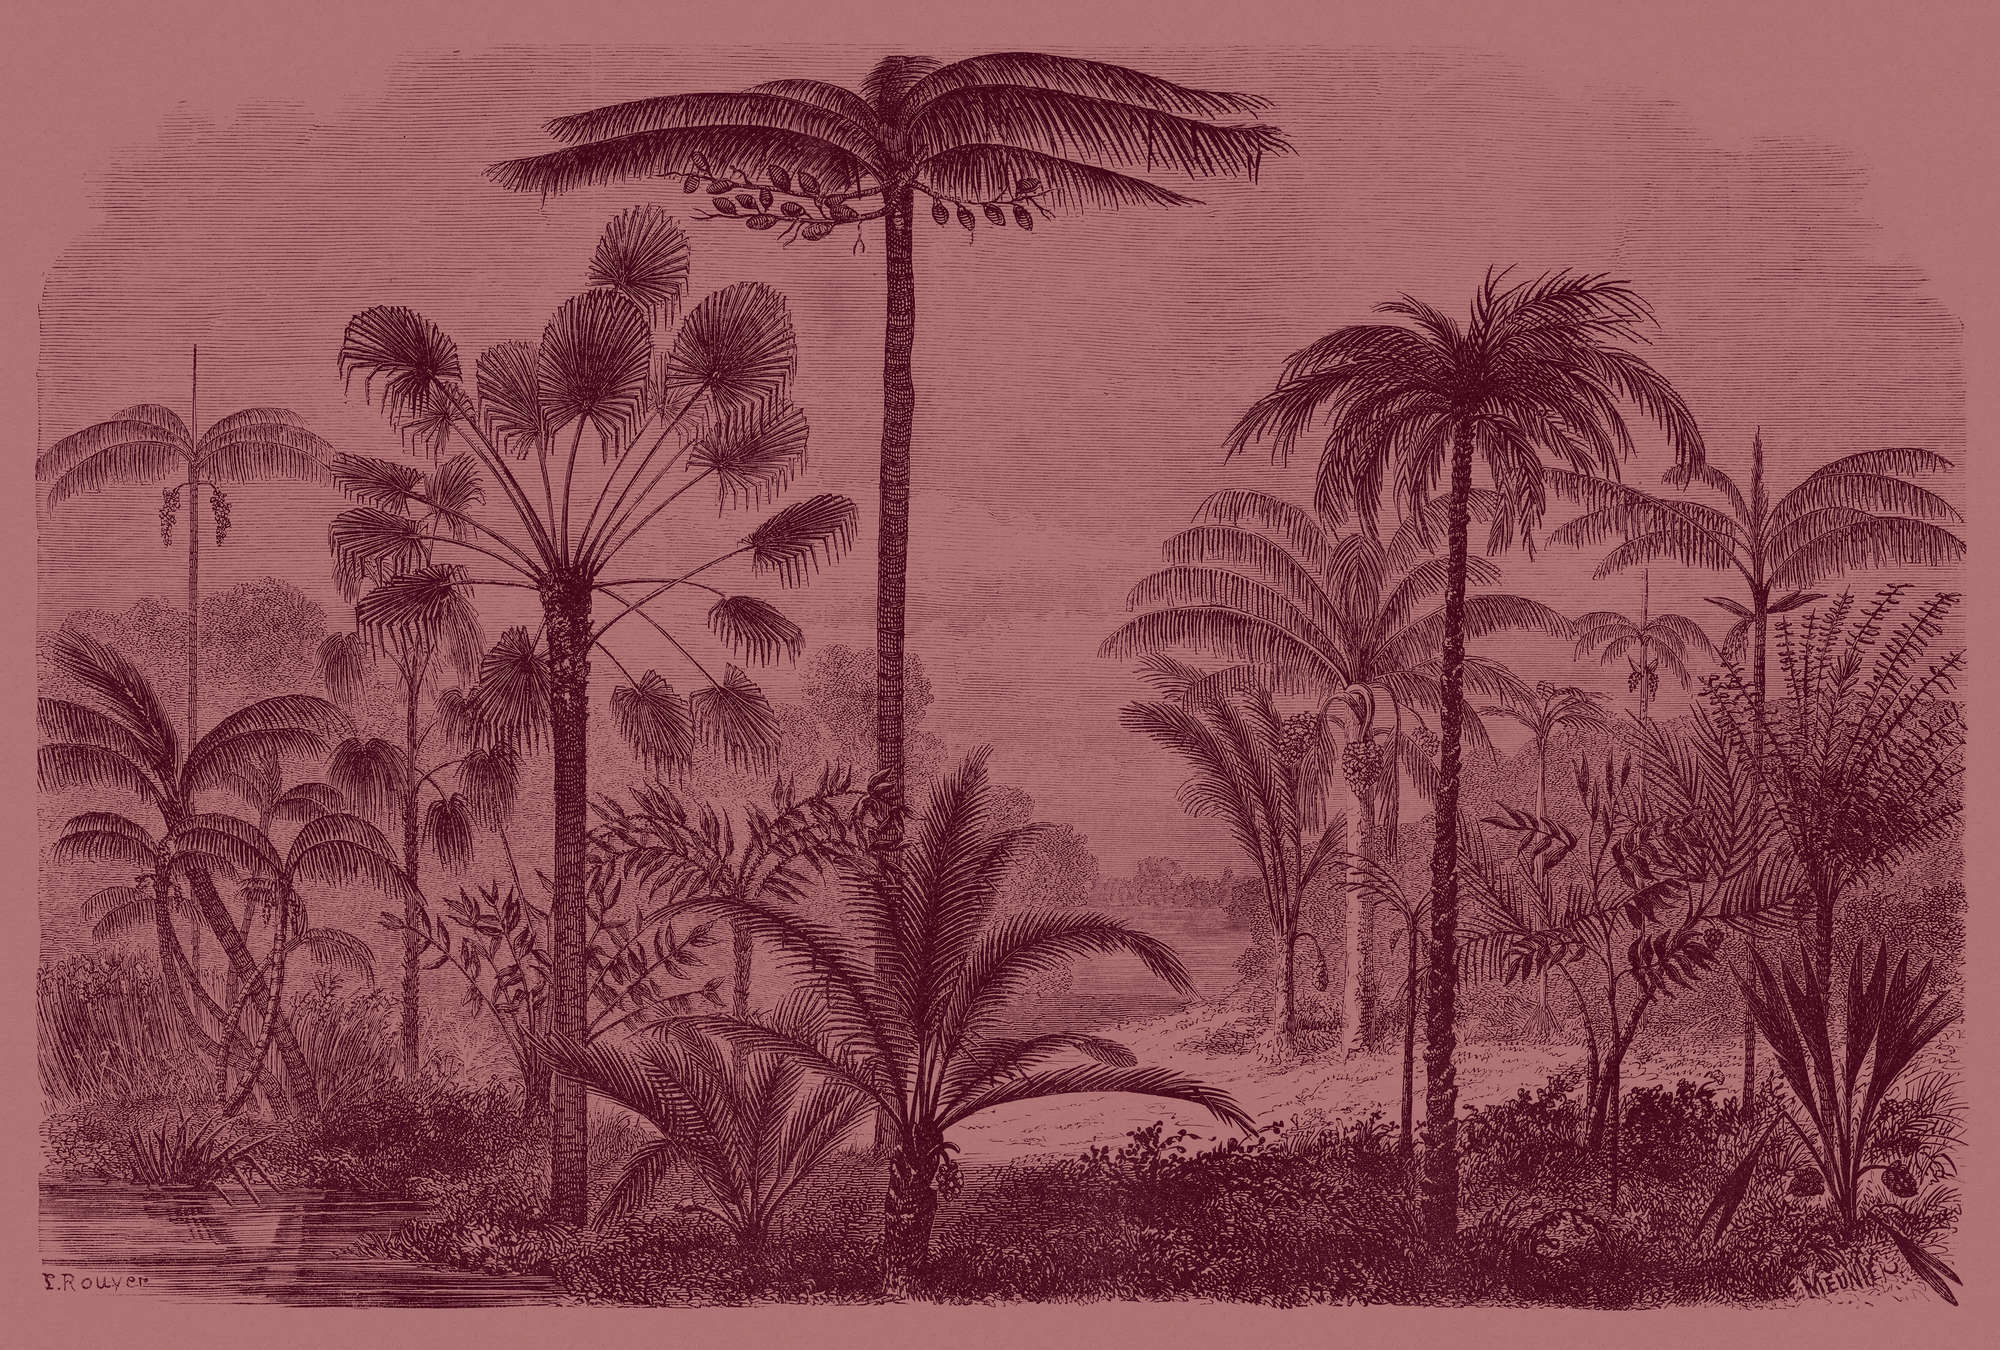             Jurassic 2 - Fototapete in Pappe Struktur Dschungelmotiv Kupferstich Rot – Rosa, Rot | Mattes Glattvlies
        